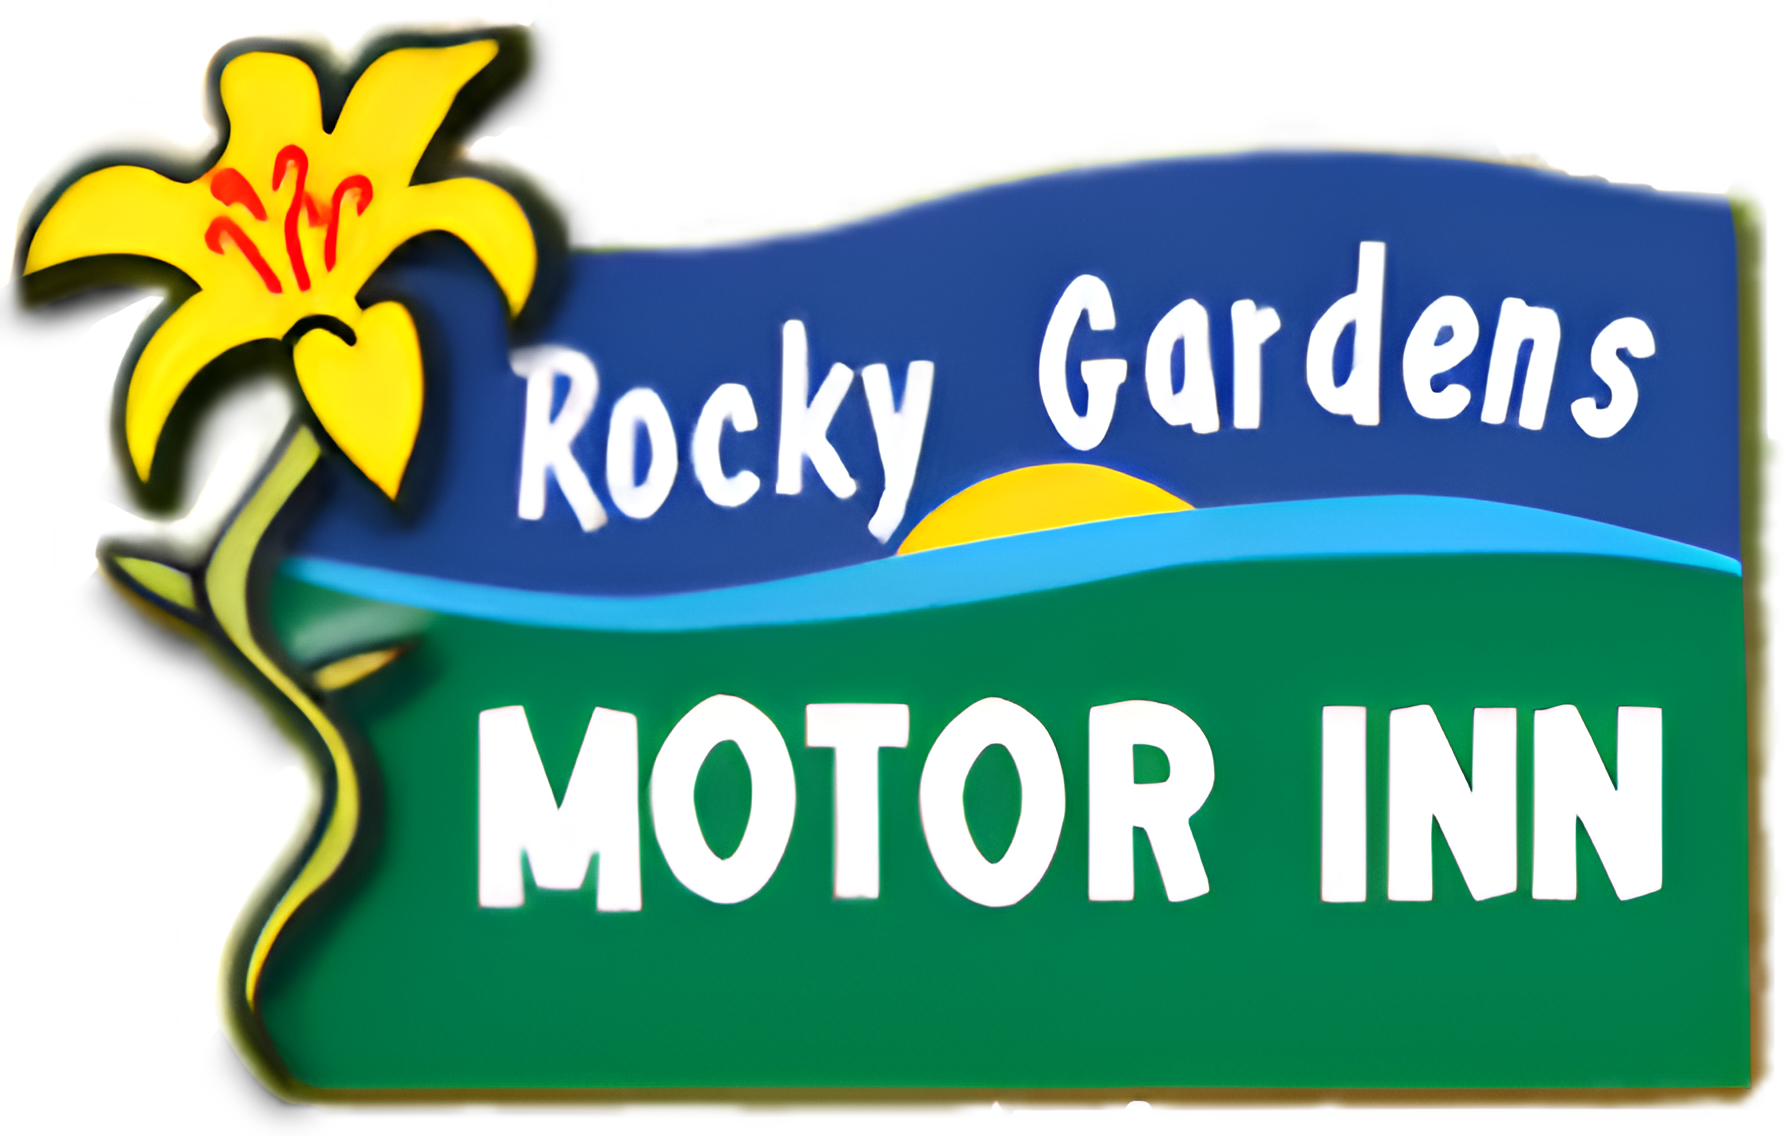 Rocky Gardens Motor Inn, Rockhampton, Qld